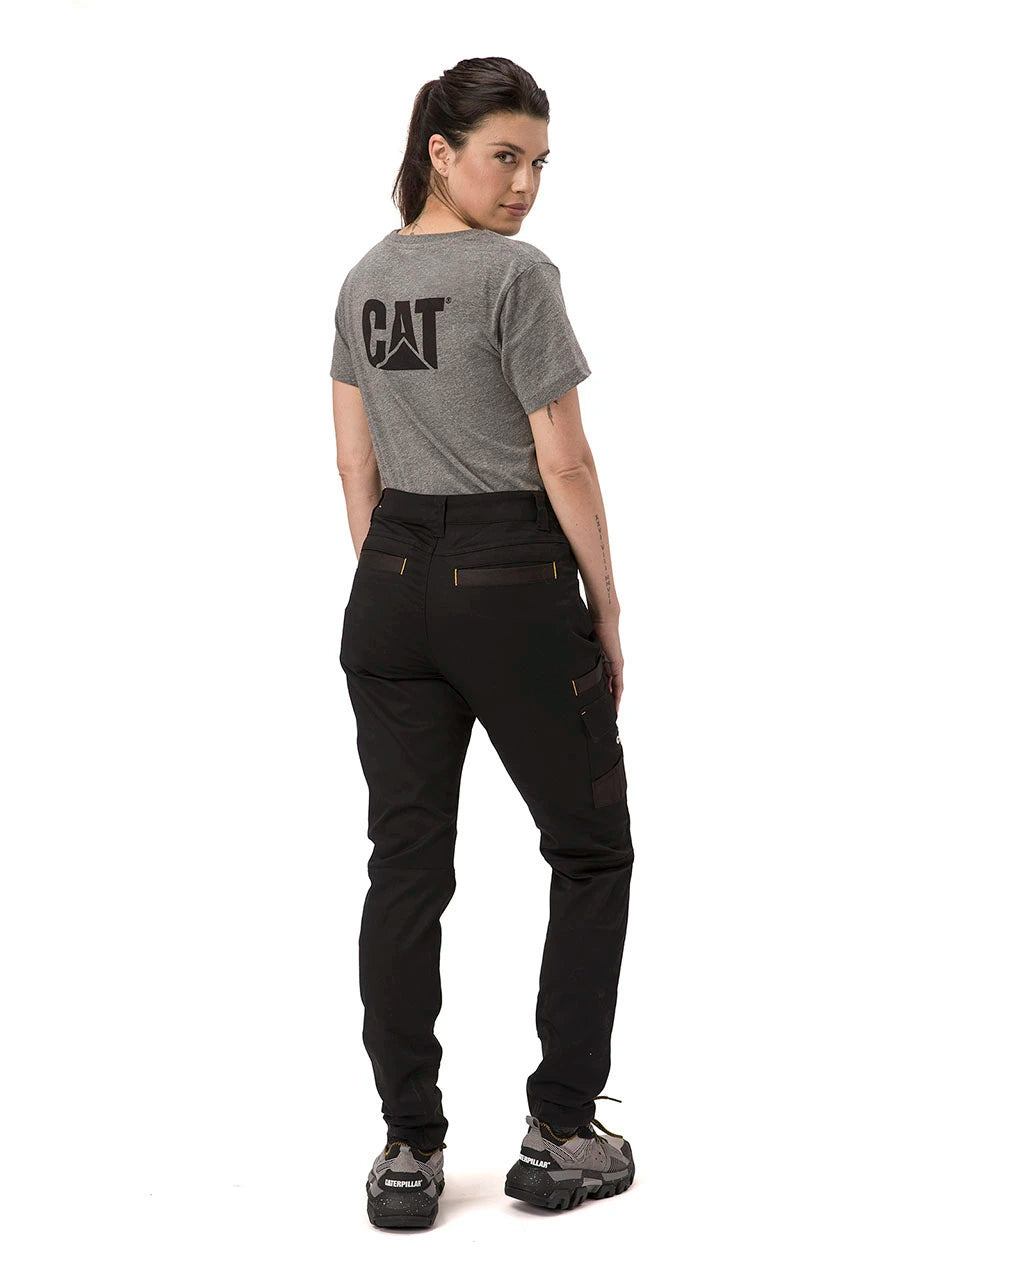 Cathalem Pants for Women Work Casual Curvy Women's Bottom